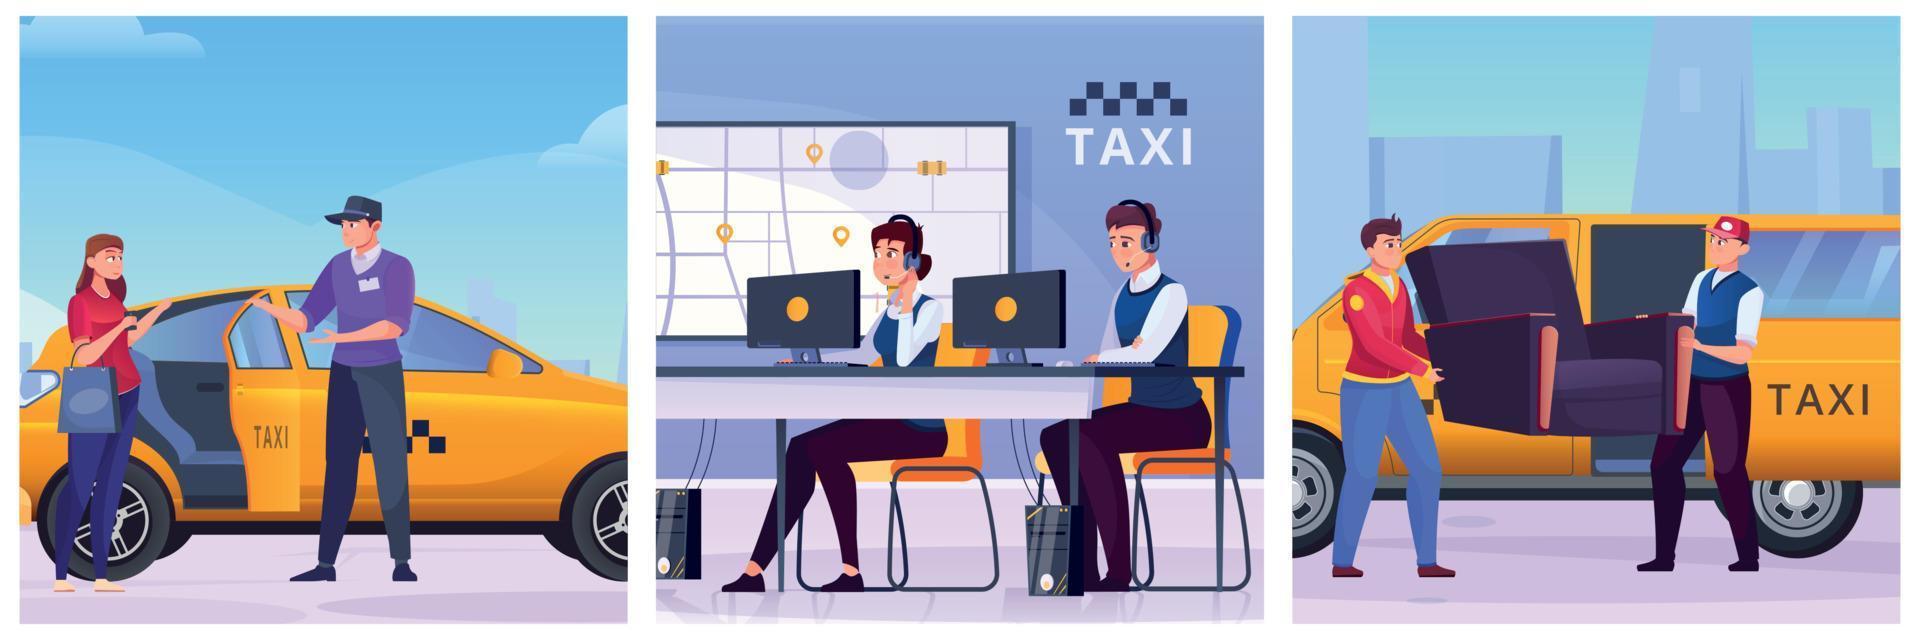 taxi illustratie plat vector